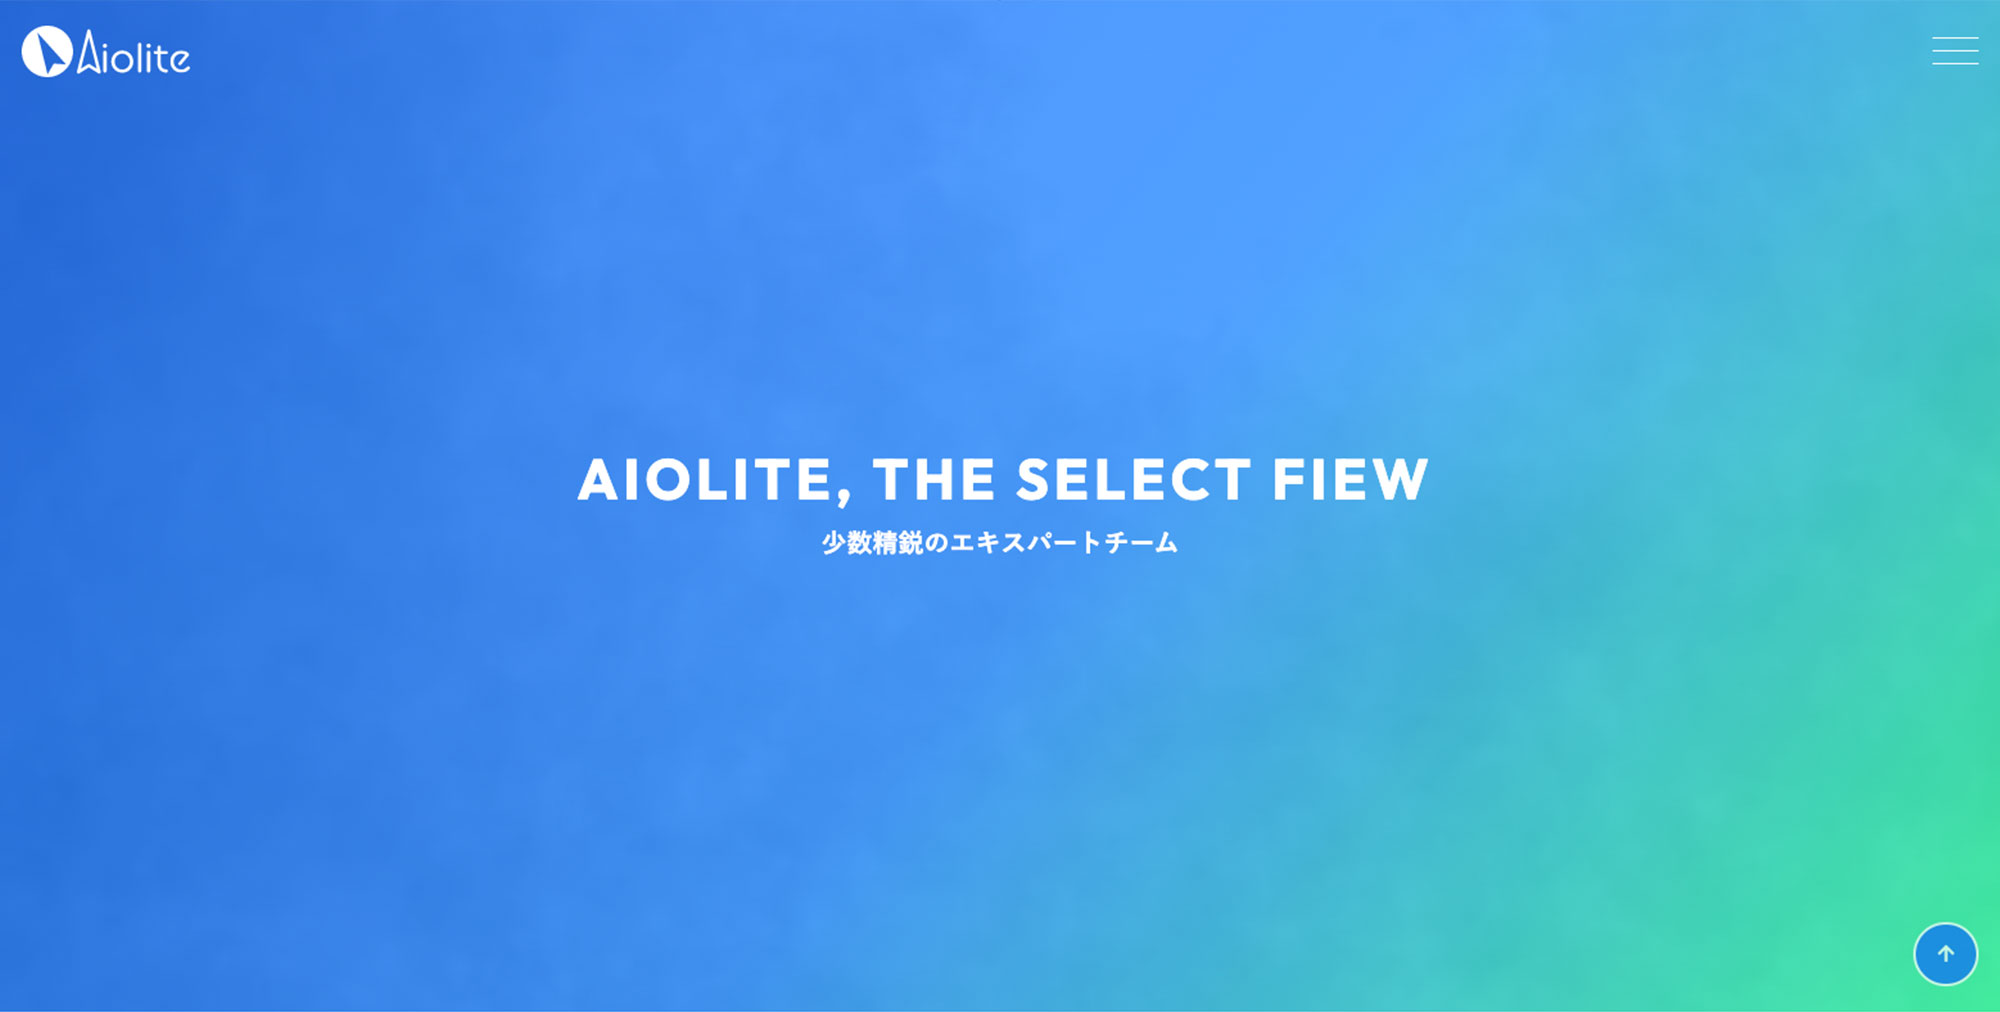 株式会社Aiolite